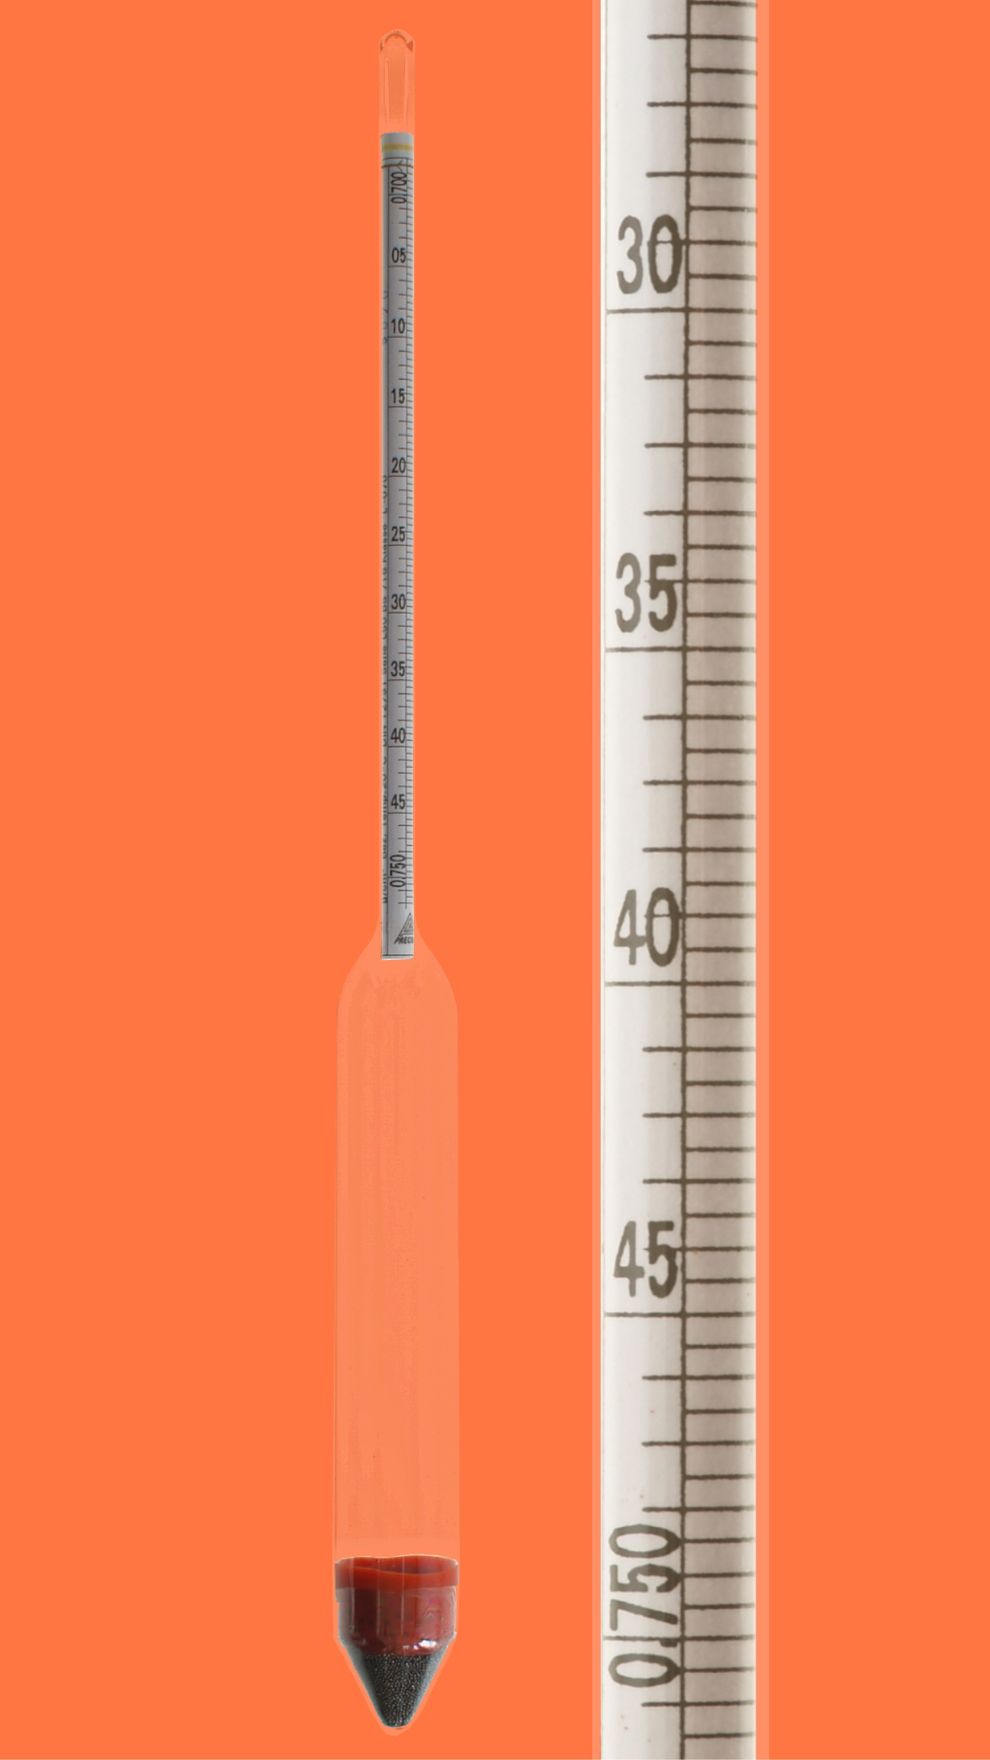 Aräometer, DIN 12791, L50, 1,70-1,75:0,0005g/cm³, Bezugstemp. 20°C, ohne Thermometer